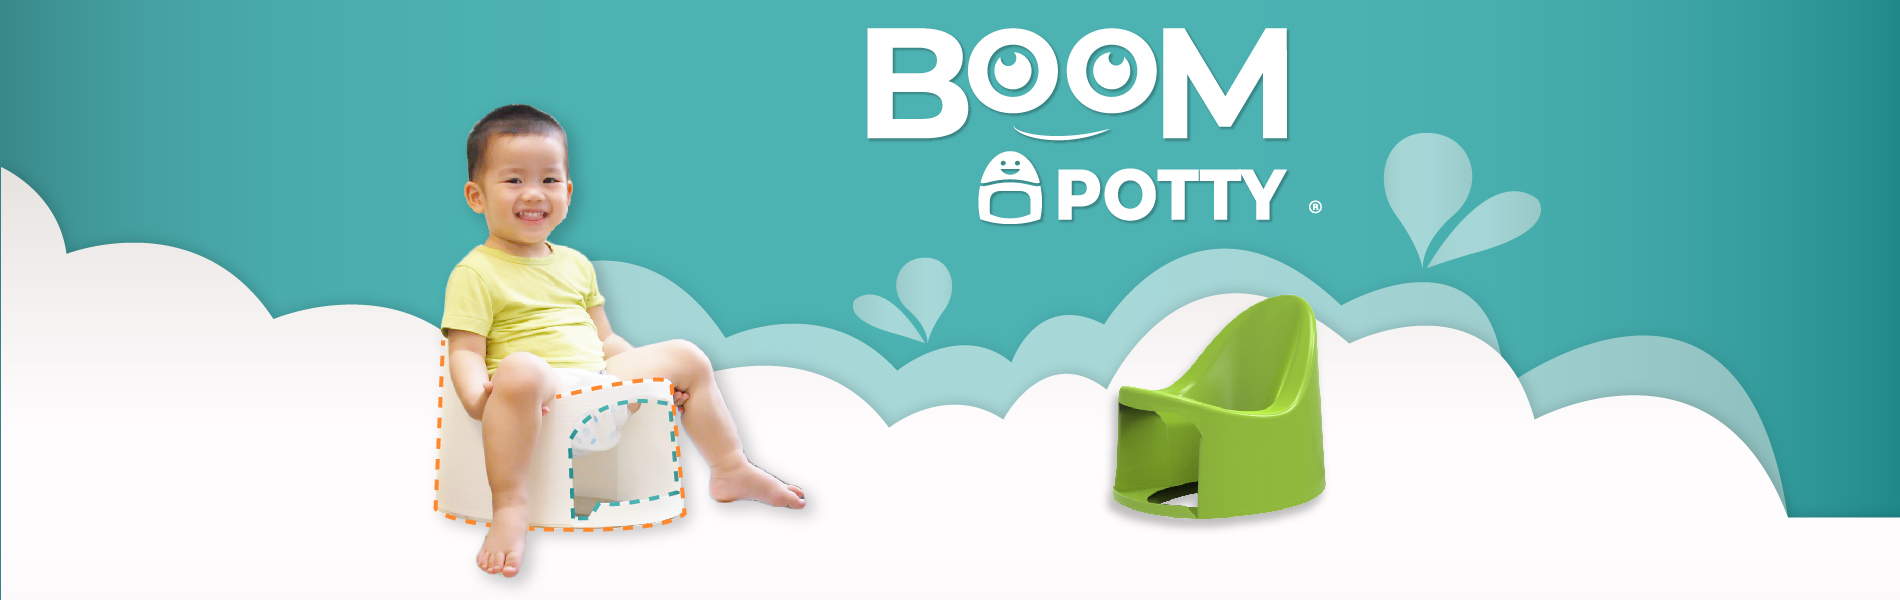 banner-boom-potty